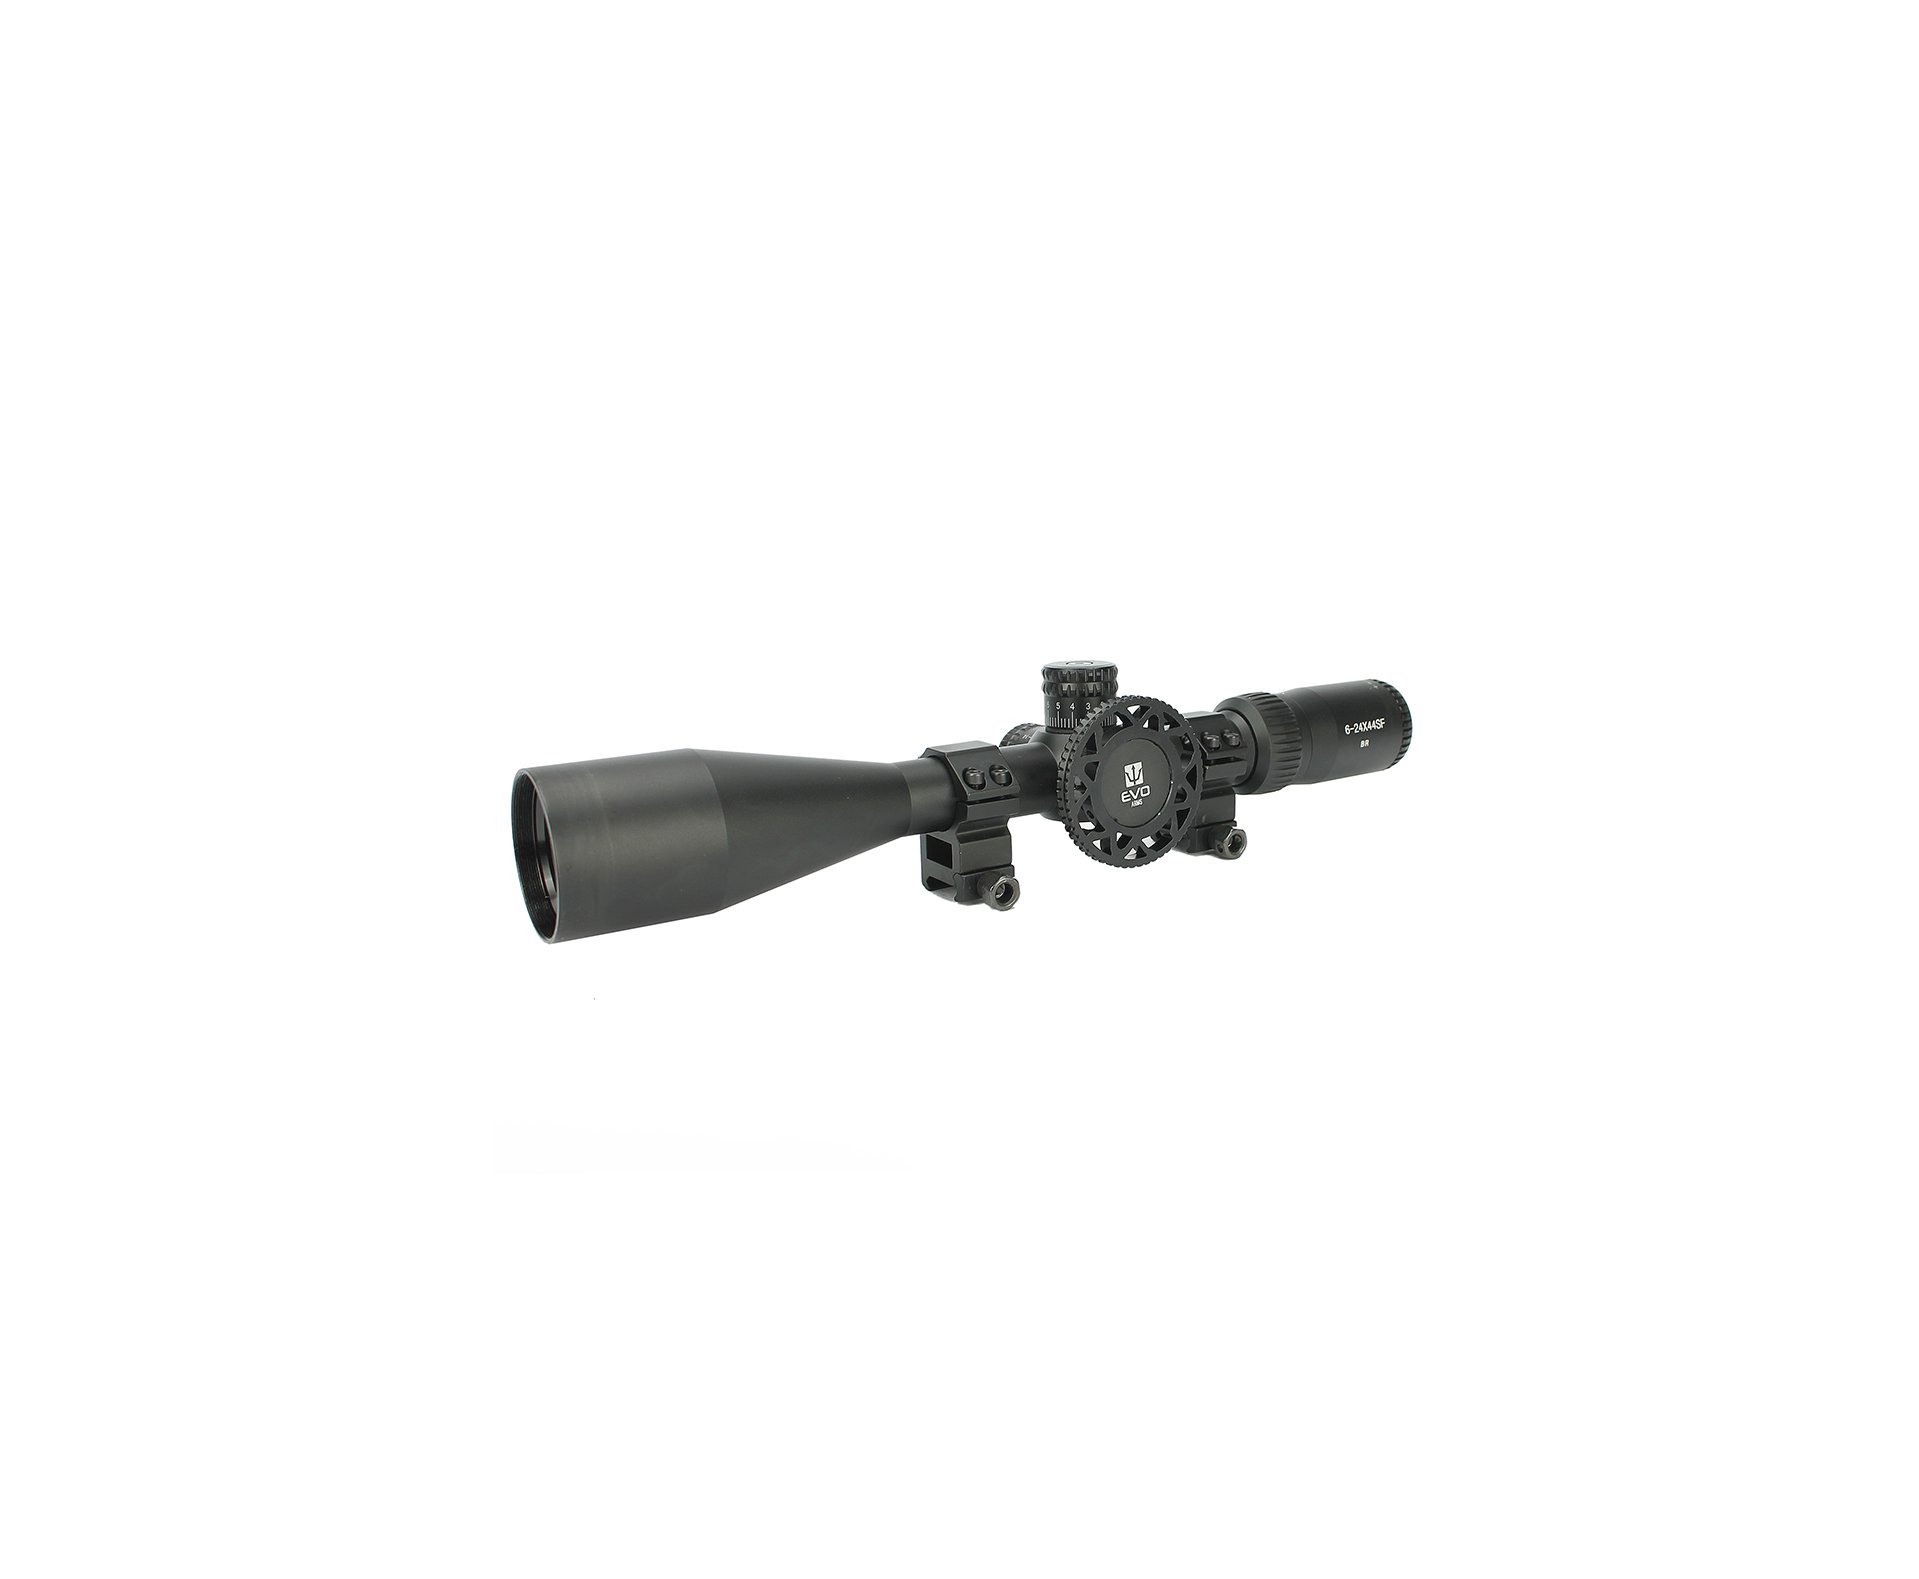 Carabina De Pressão Pcp Puncher Bighorn 07 Tiros 9mm Kral Arms + Luneta Evo 6-24x44